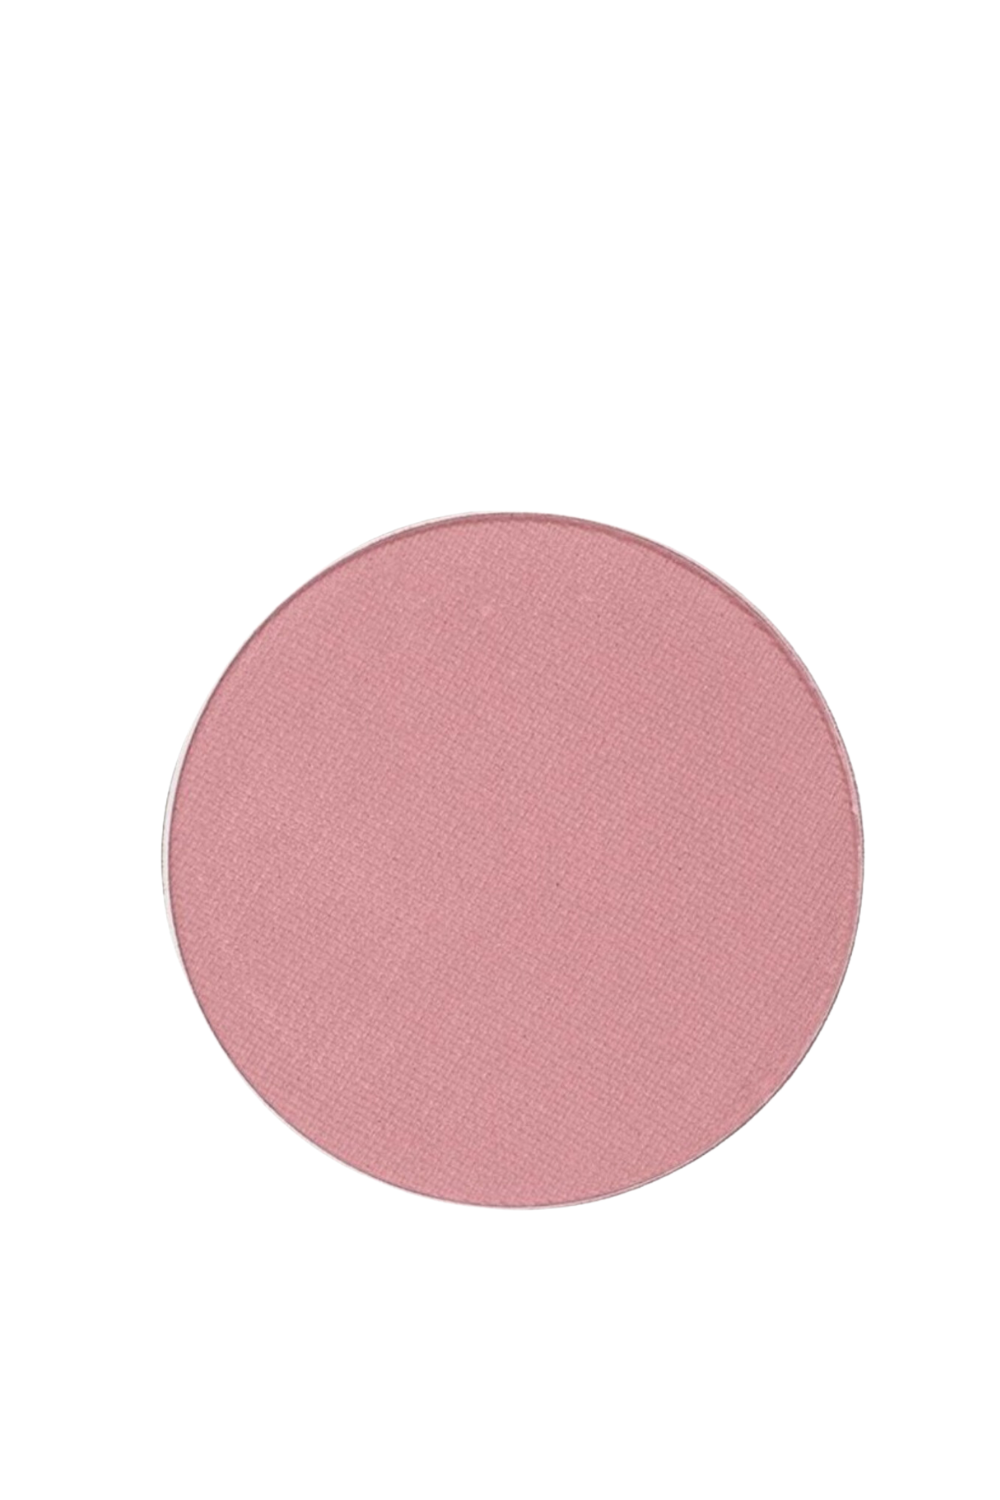 Blush Pink Mineral Blush- a soft matte pink